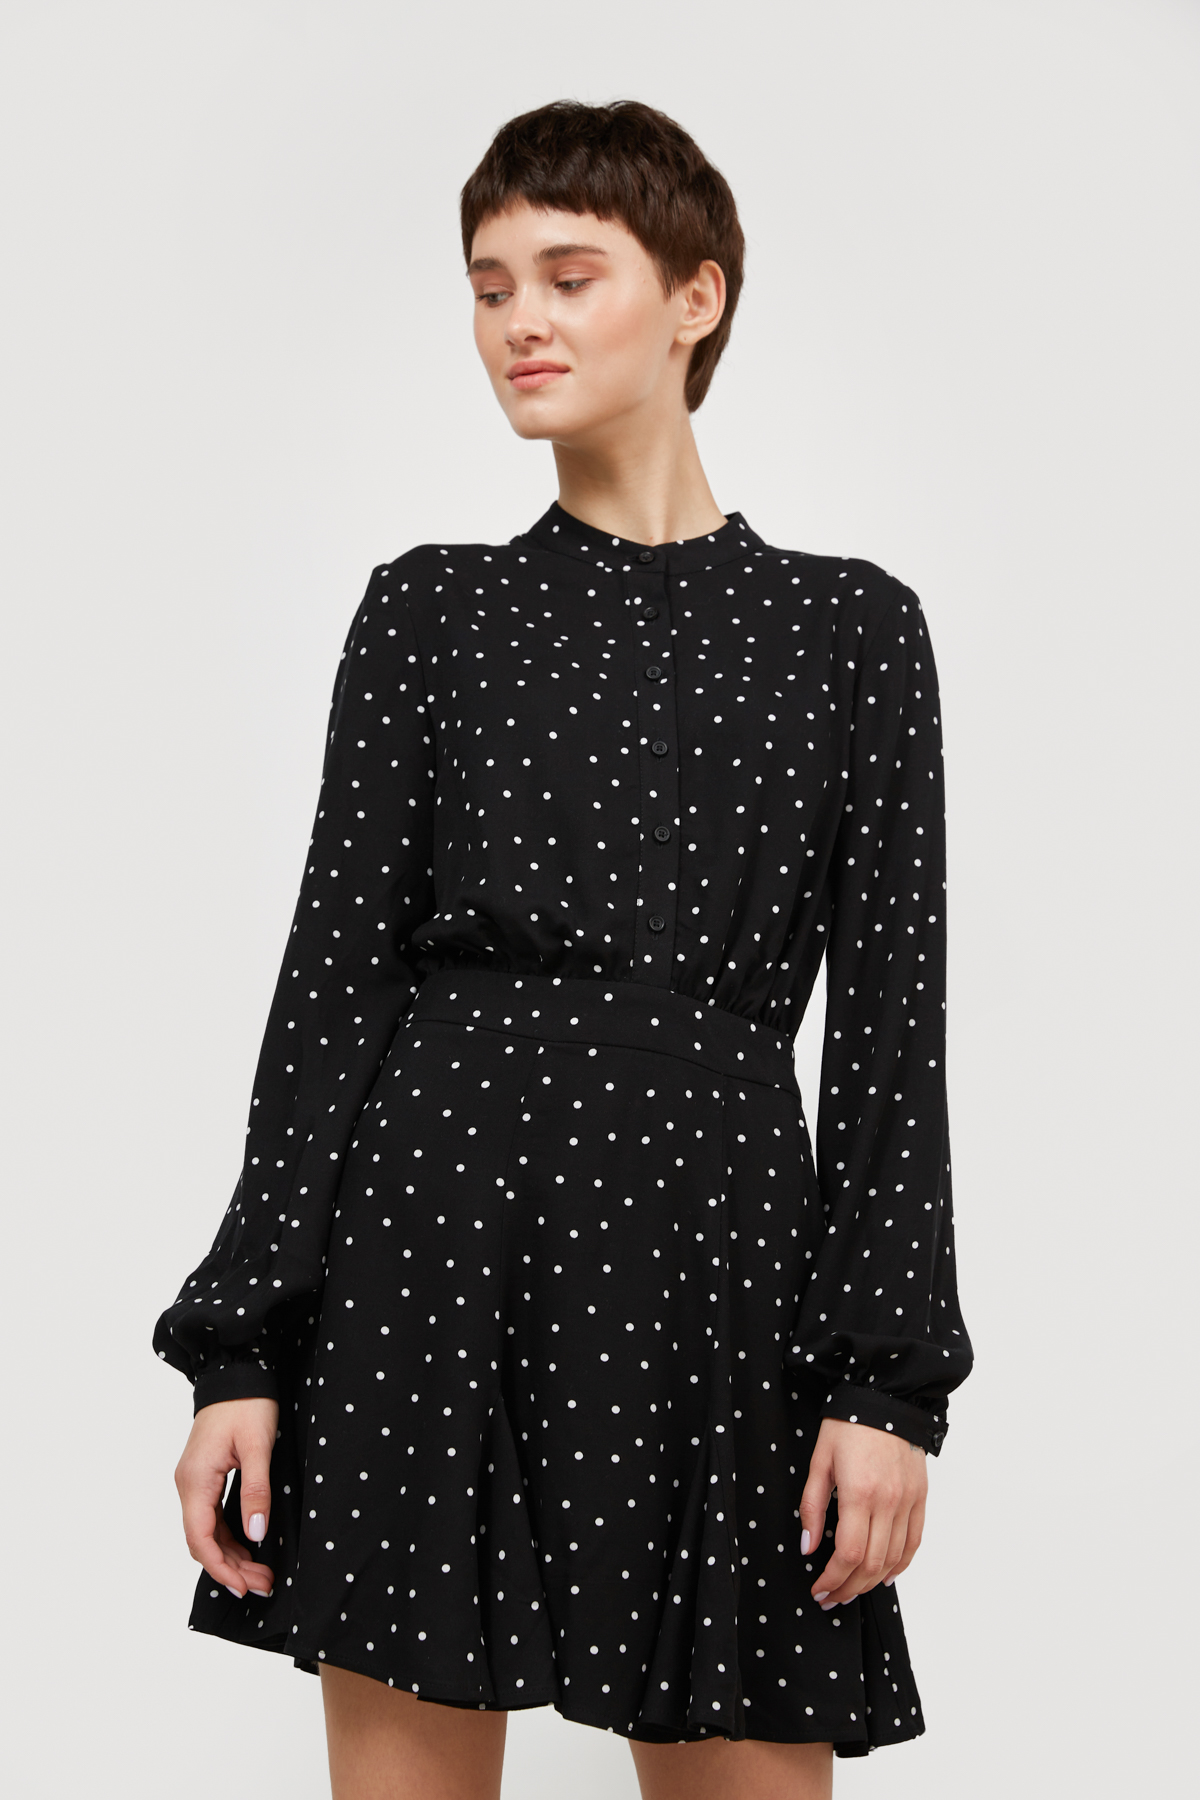 Viscose short dress black in white polka dots print, photo 5